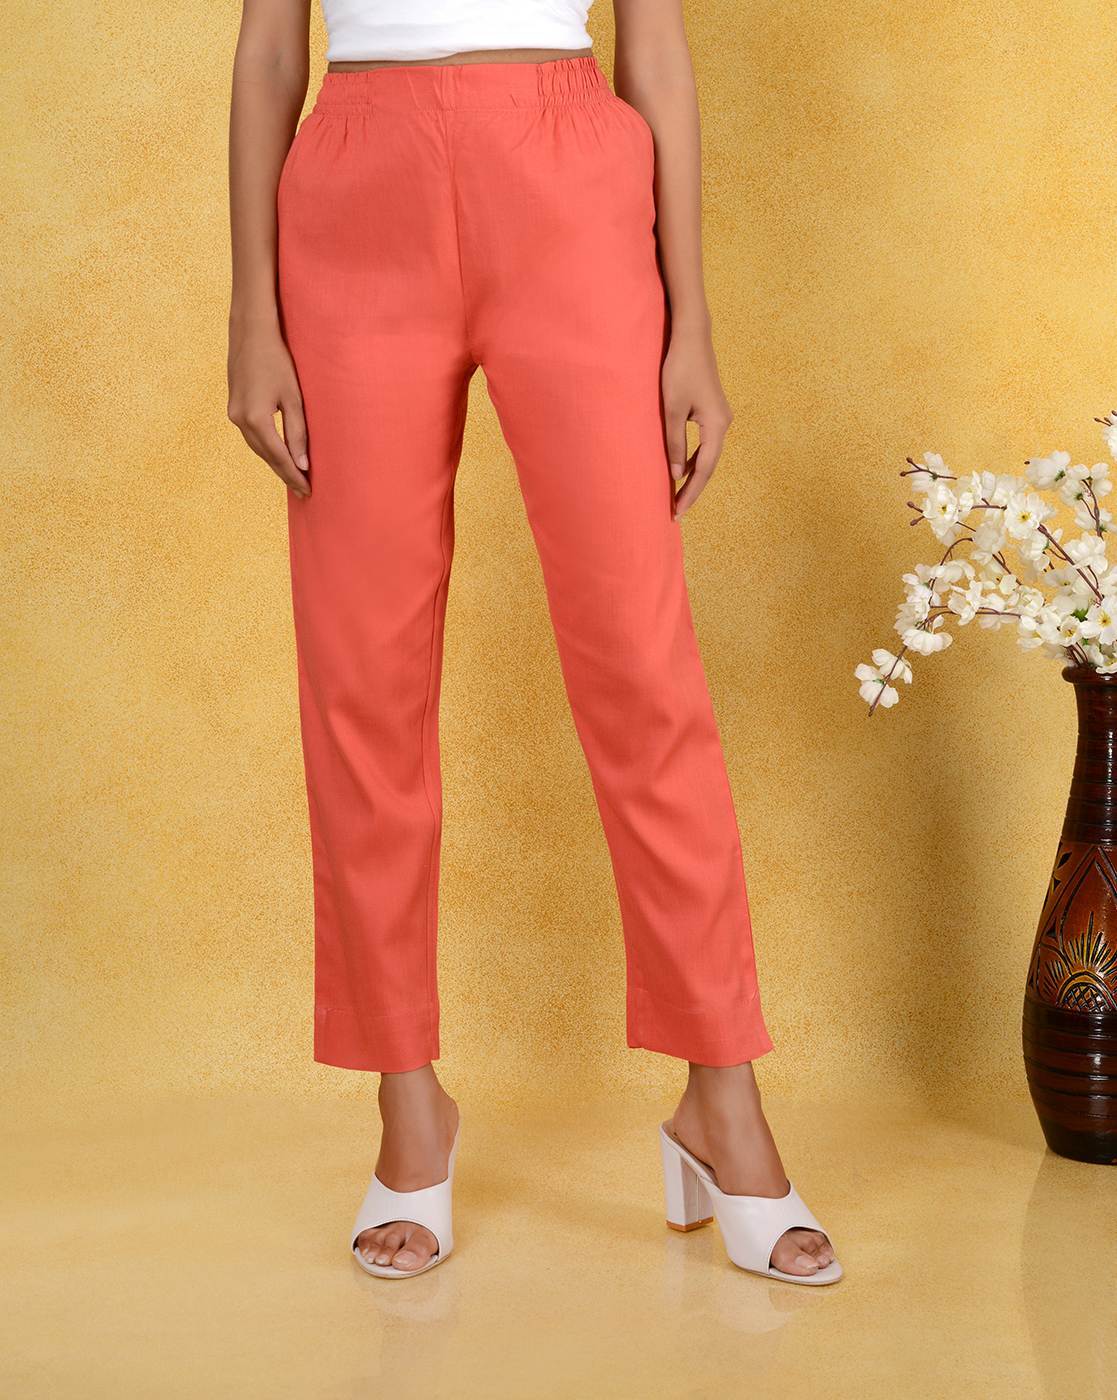 Crinkled Coral Pink Pants - Belted Pants - Wide-Leg Pants - Lulus